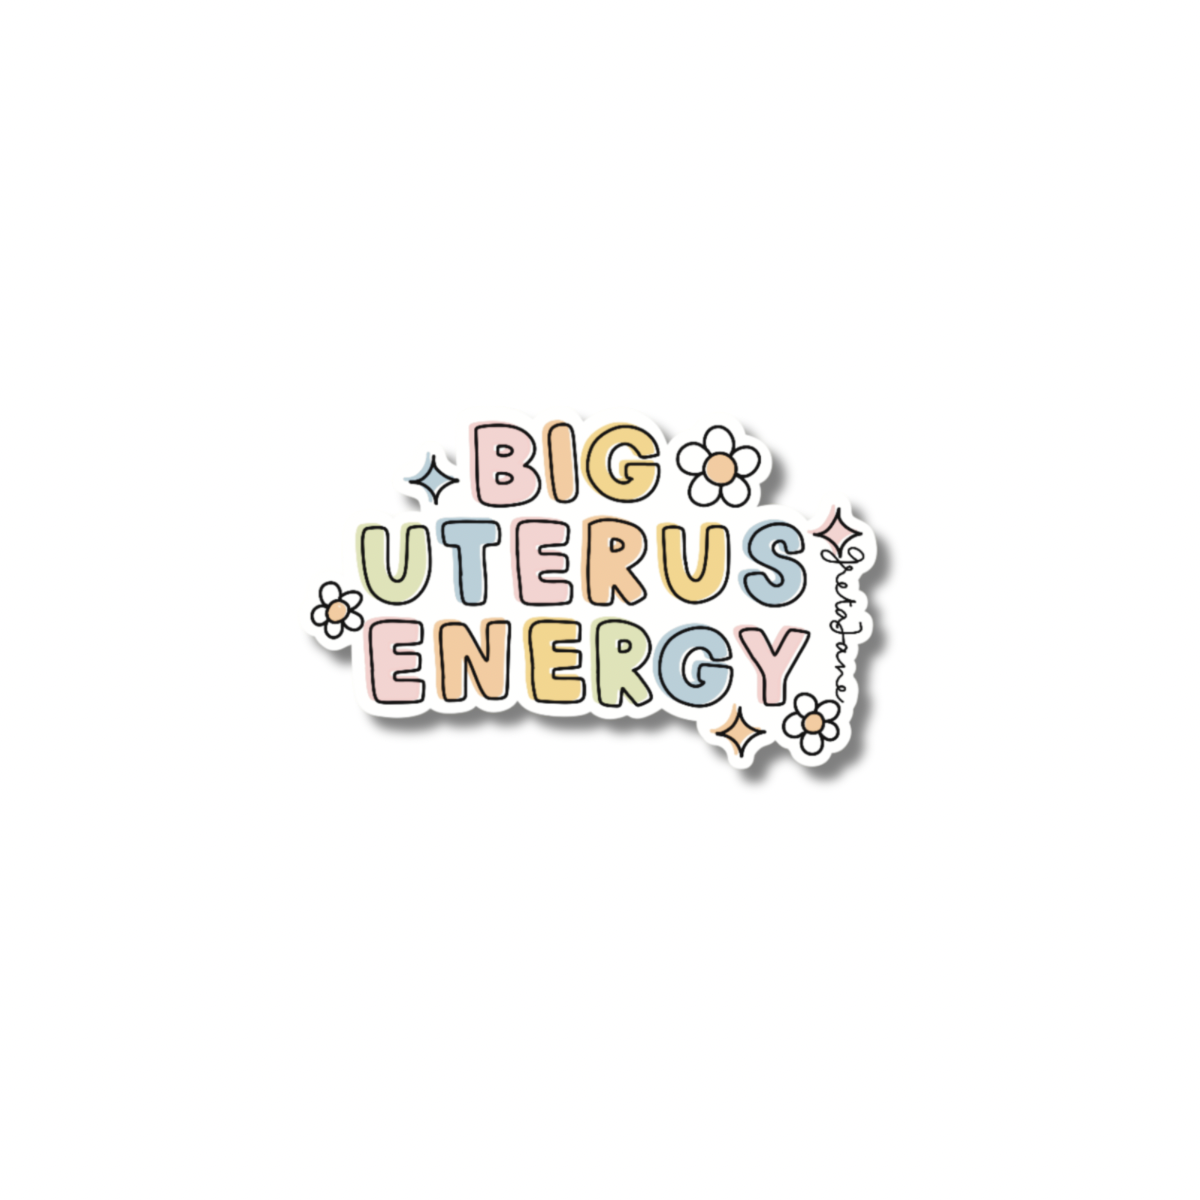 Big uterus energy